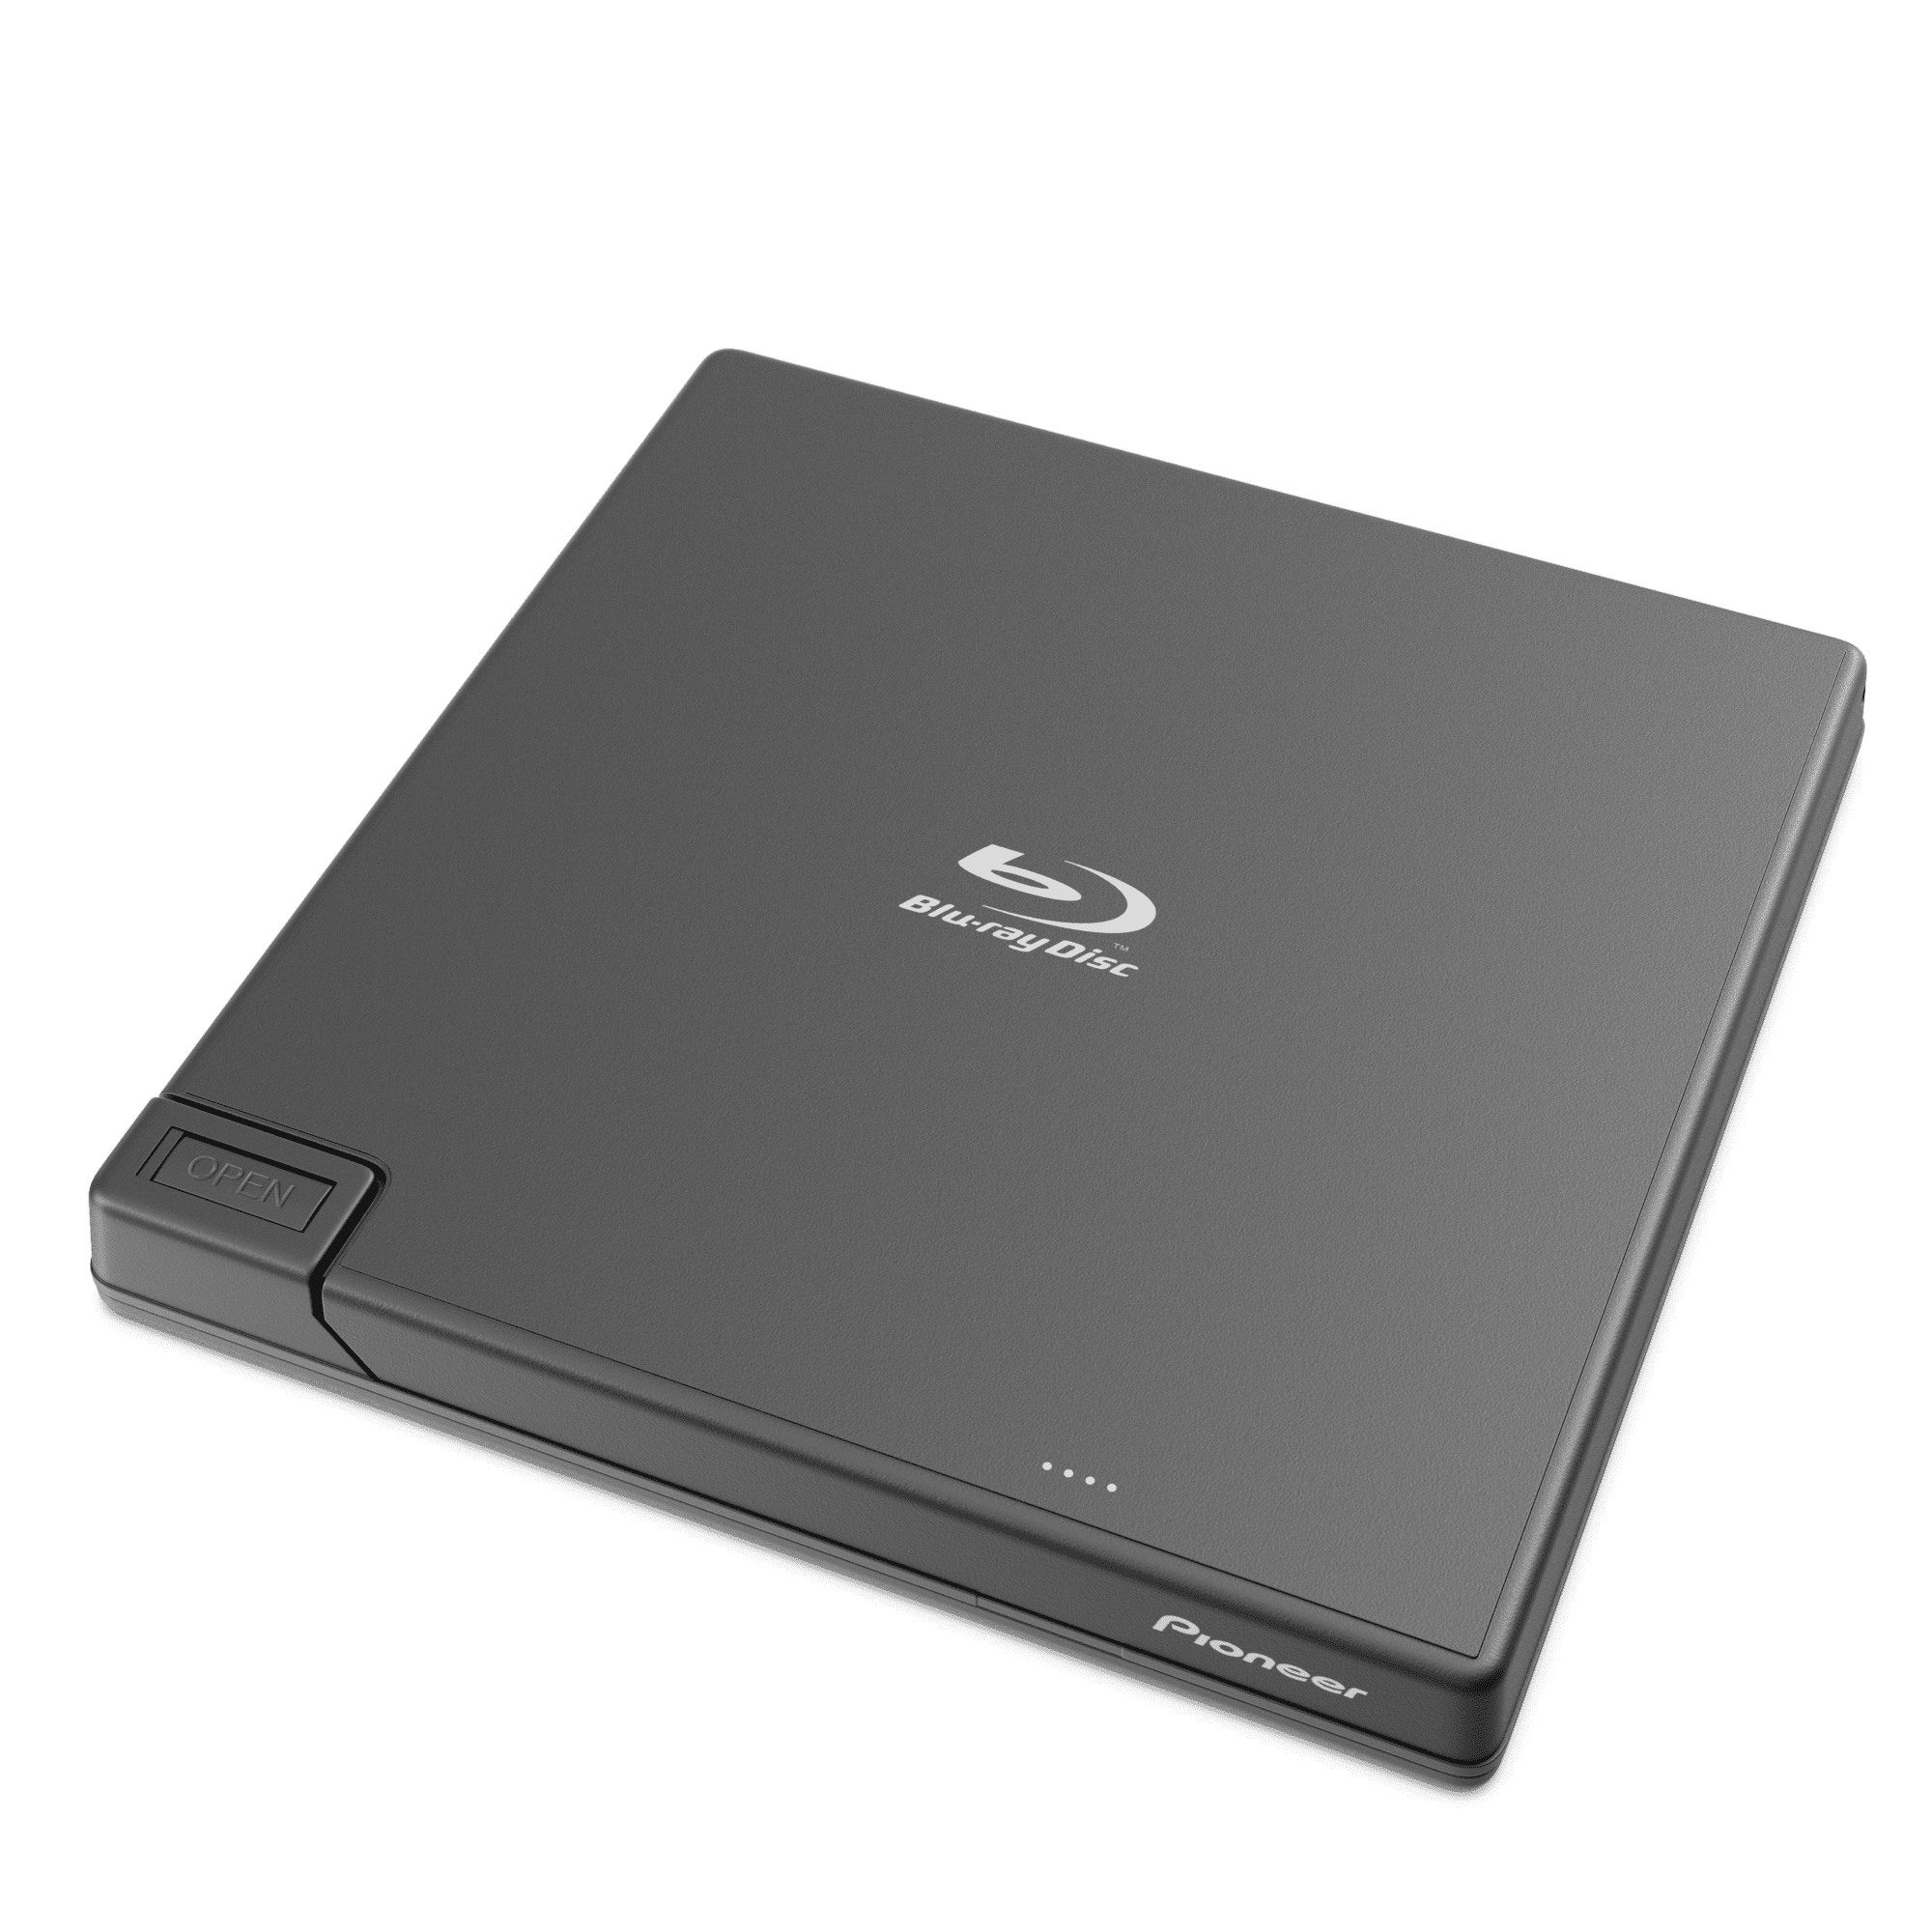 Pioneer Electronics BDR-XD07B 6x Slim Portable USB 3.0 BD/DVD/CD Burner  Supports BDXL & M-Disc Format with CyberLink Software, Black